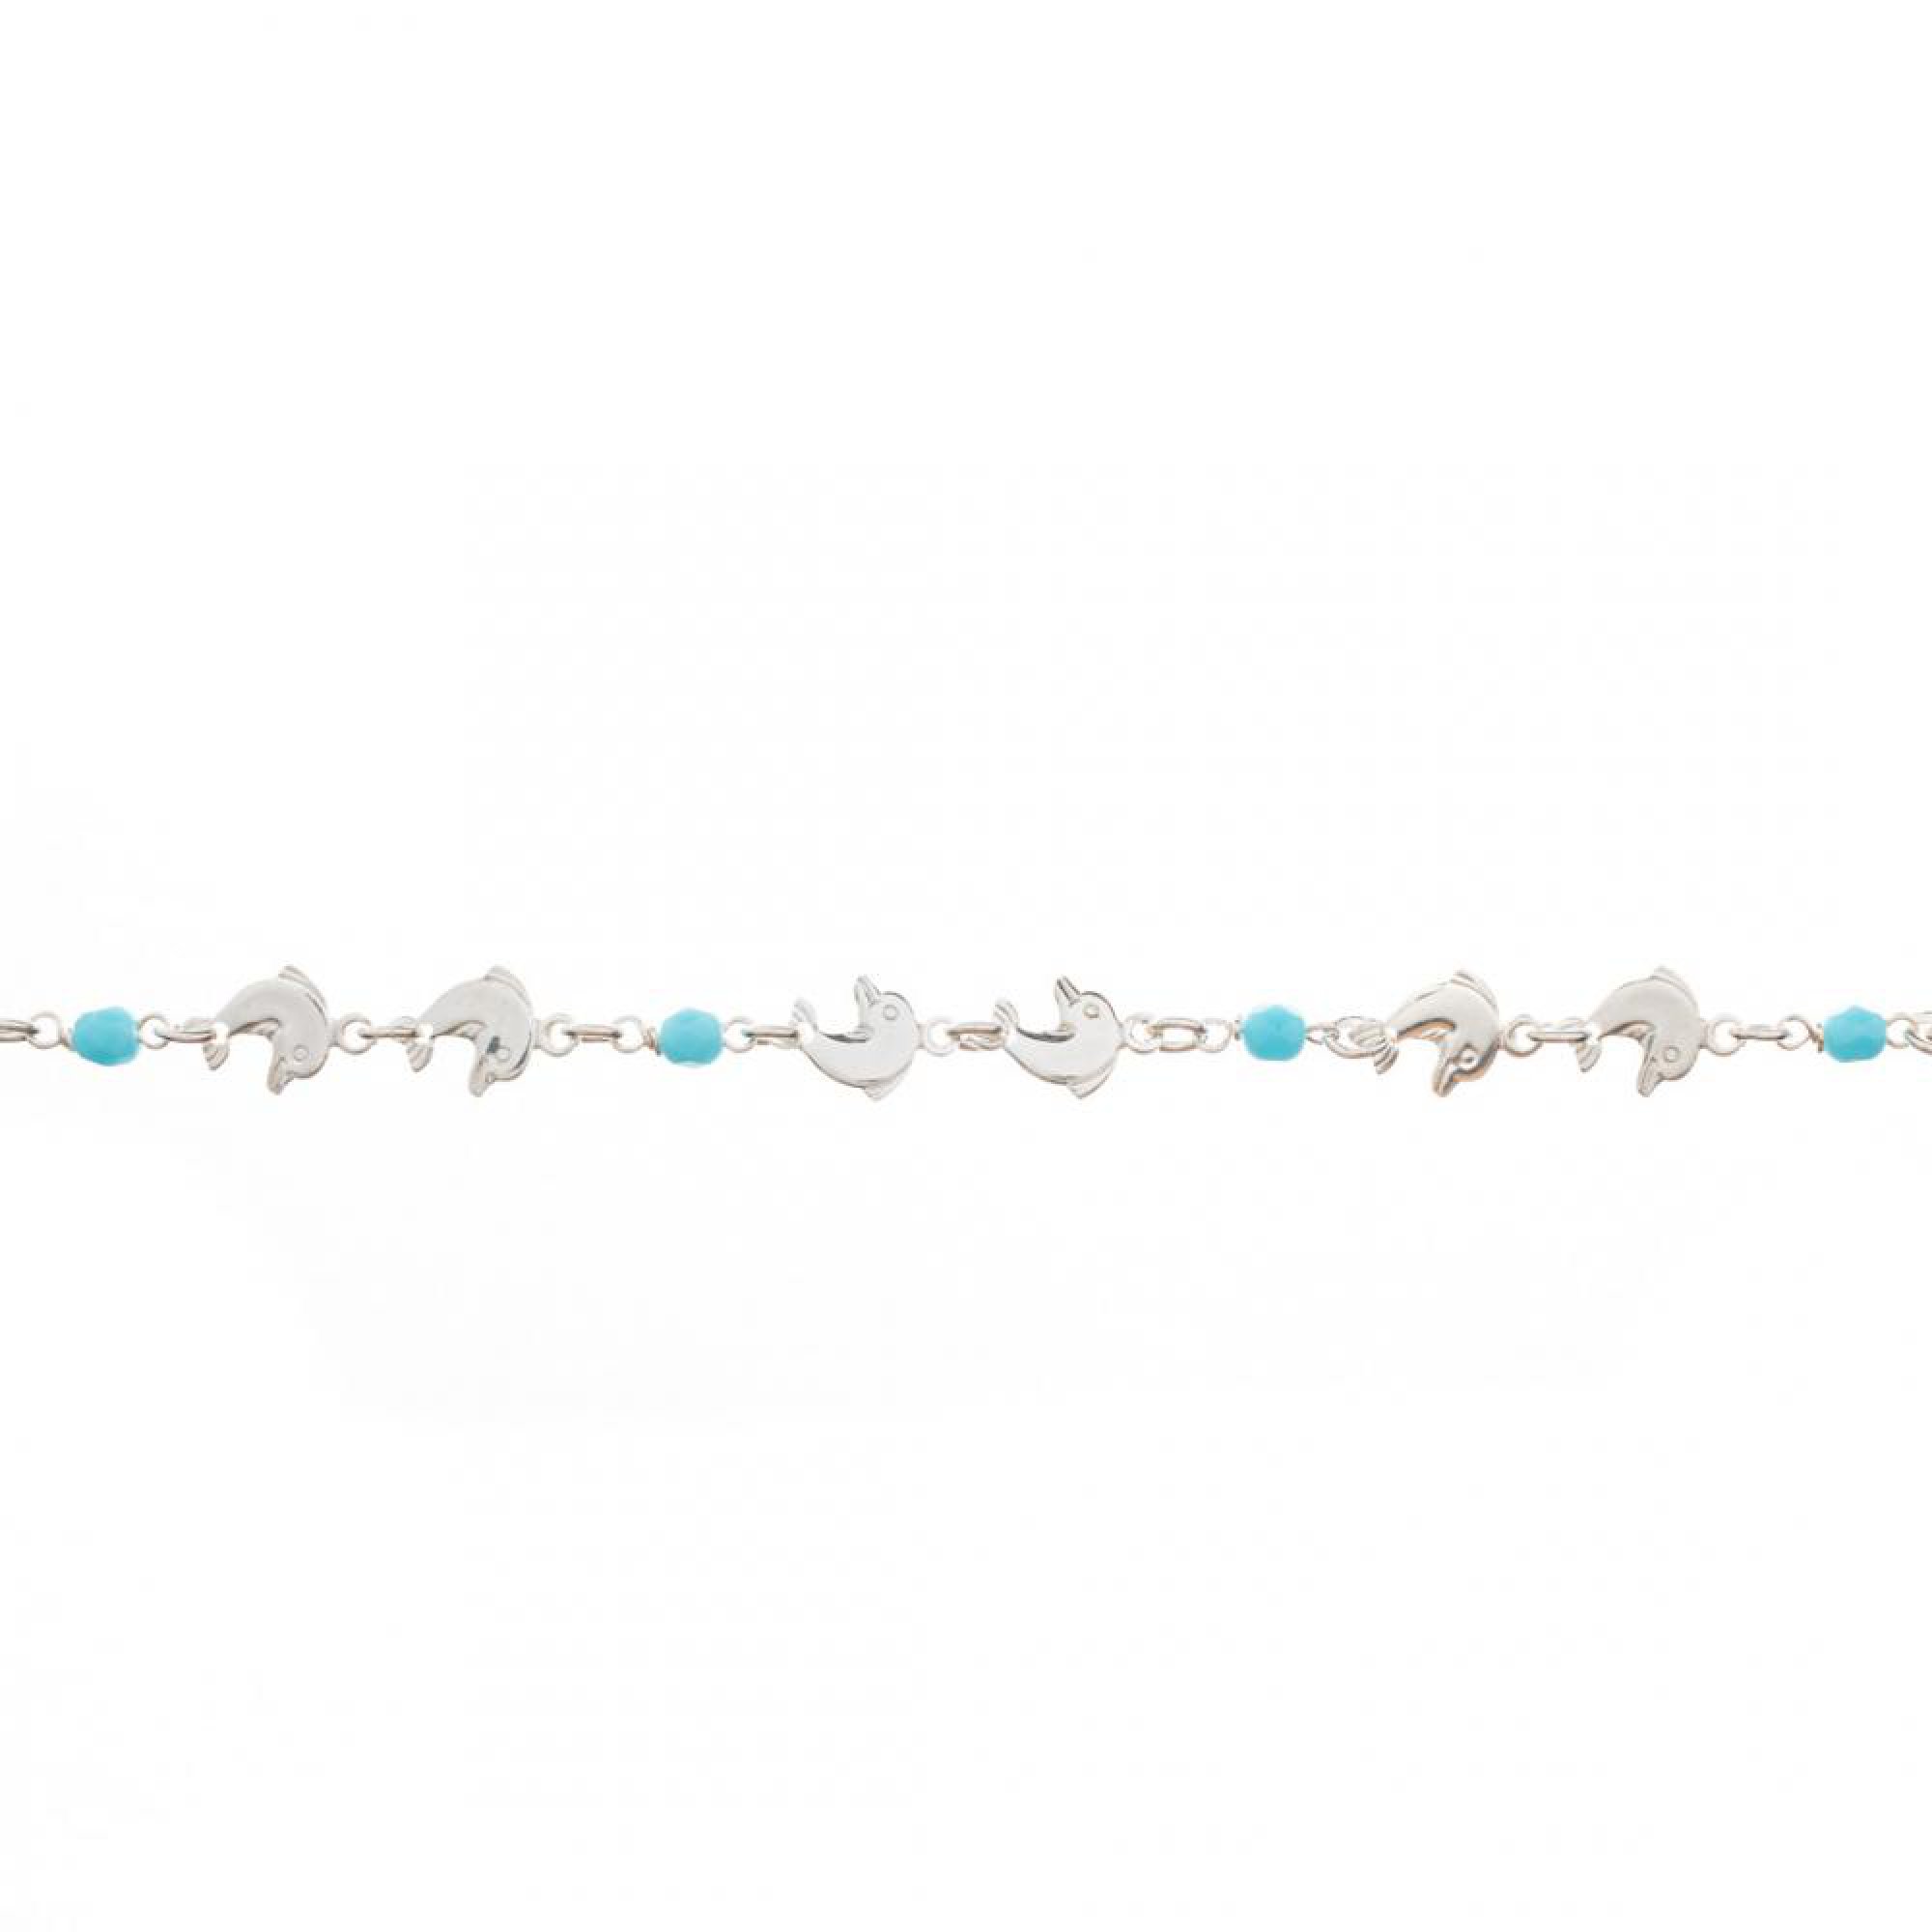 Dolphin bracelet with enamel blue beads